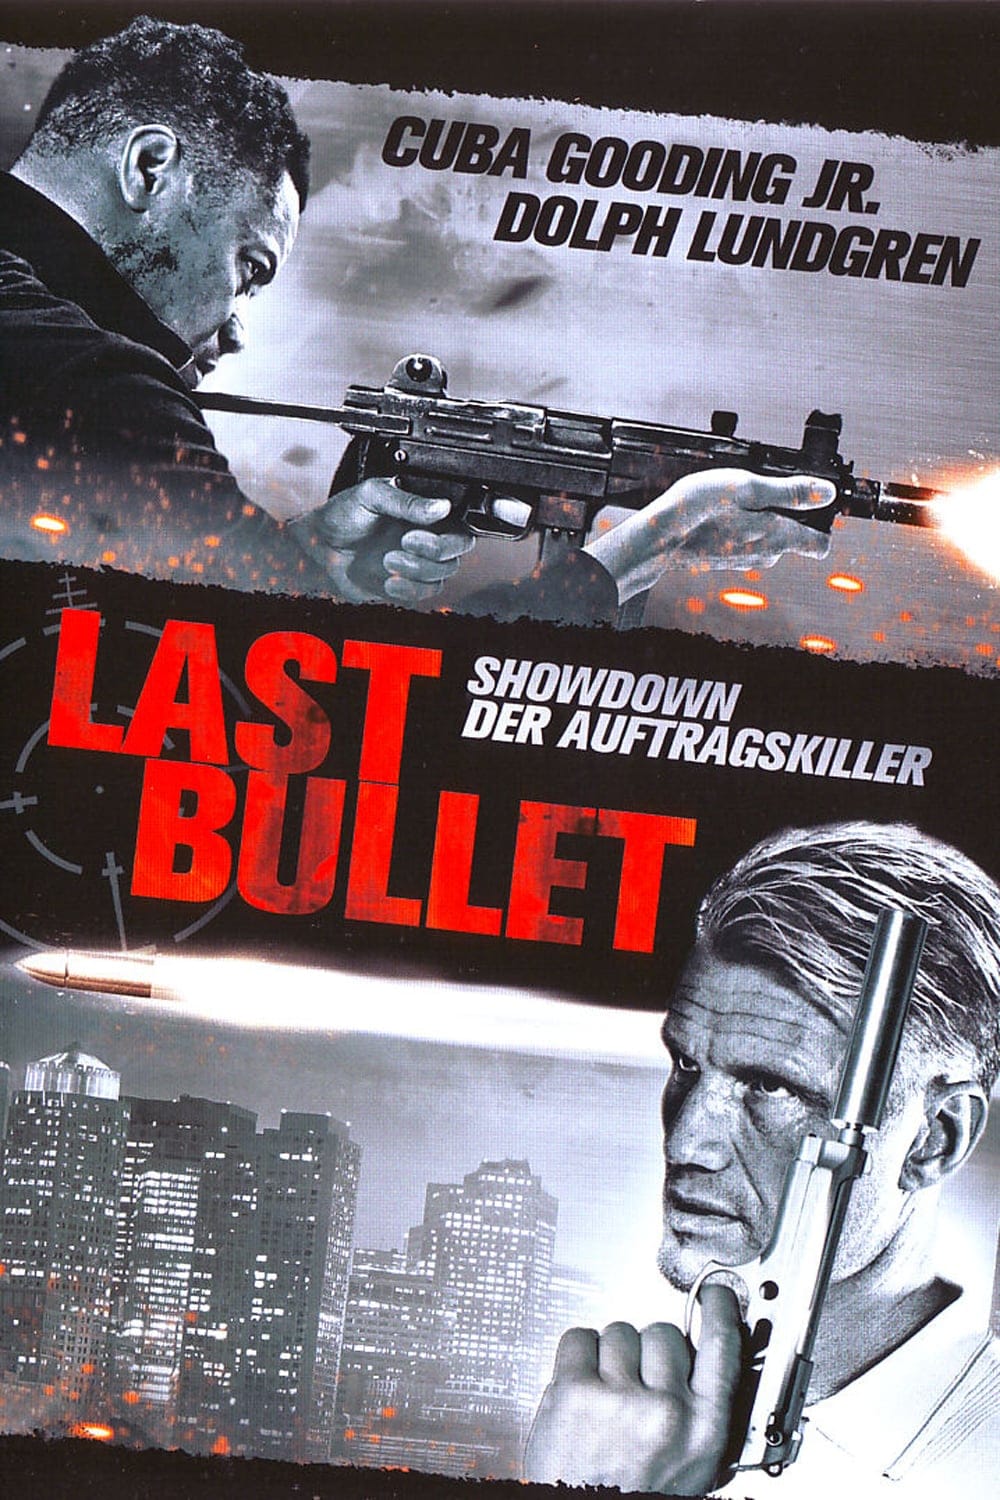 Plakat von "Last Bullet"